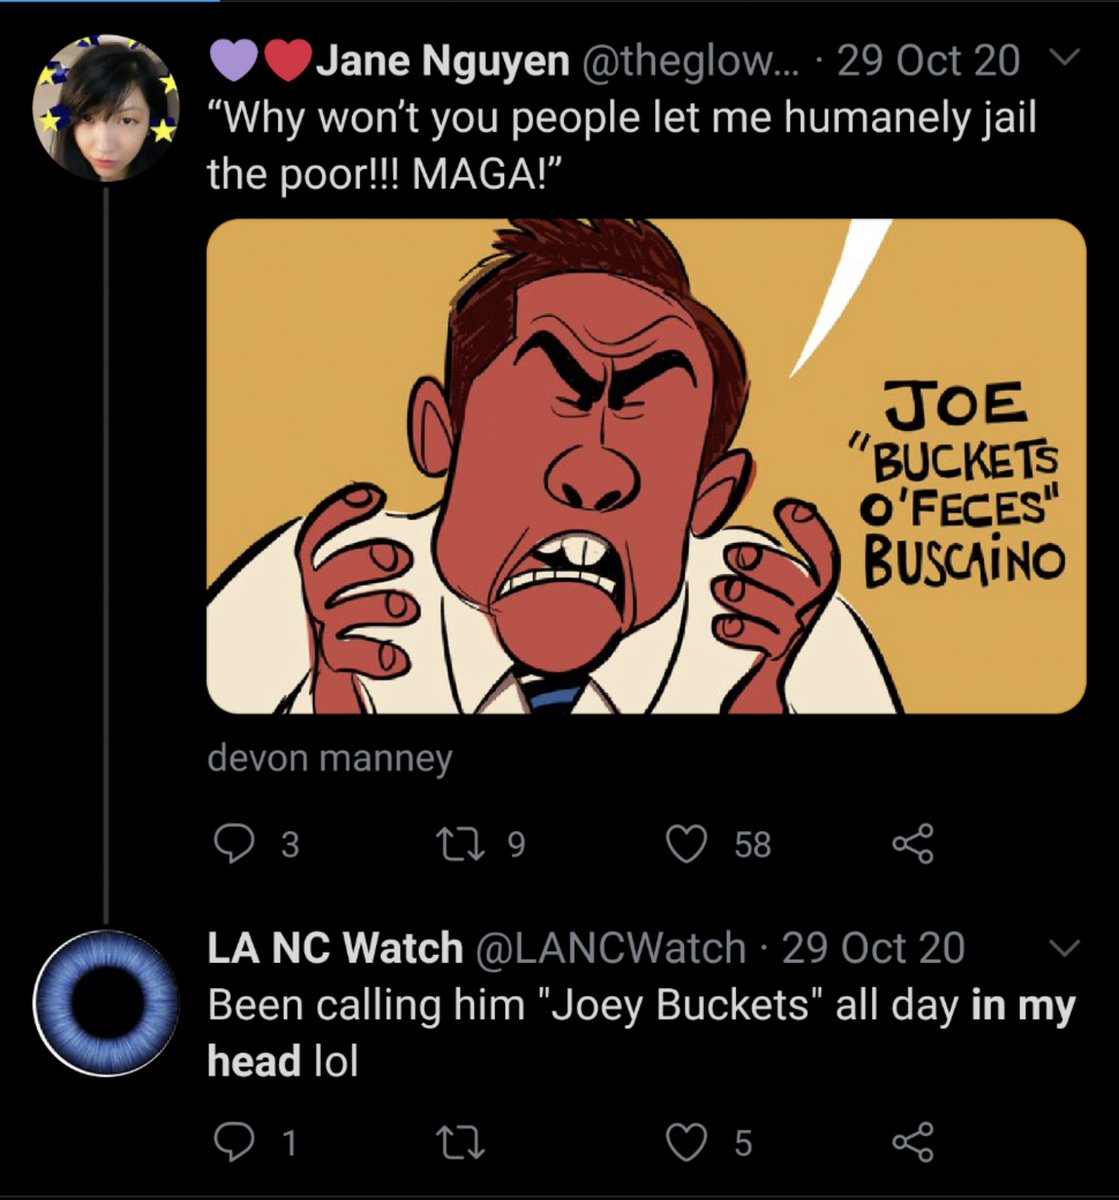 The origins of 'Joey Buckets'

#freeLANCwatch